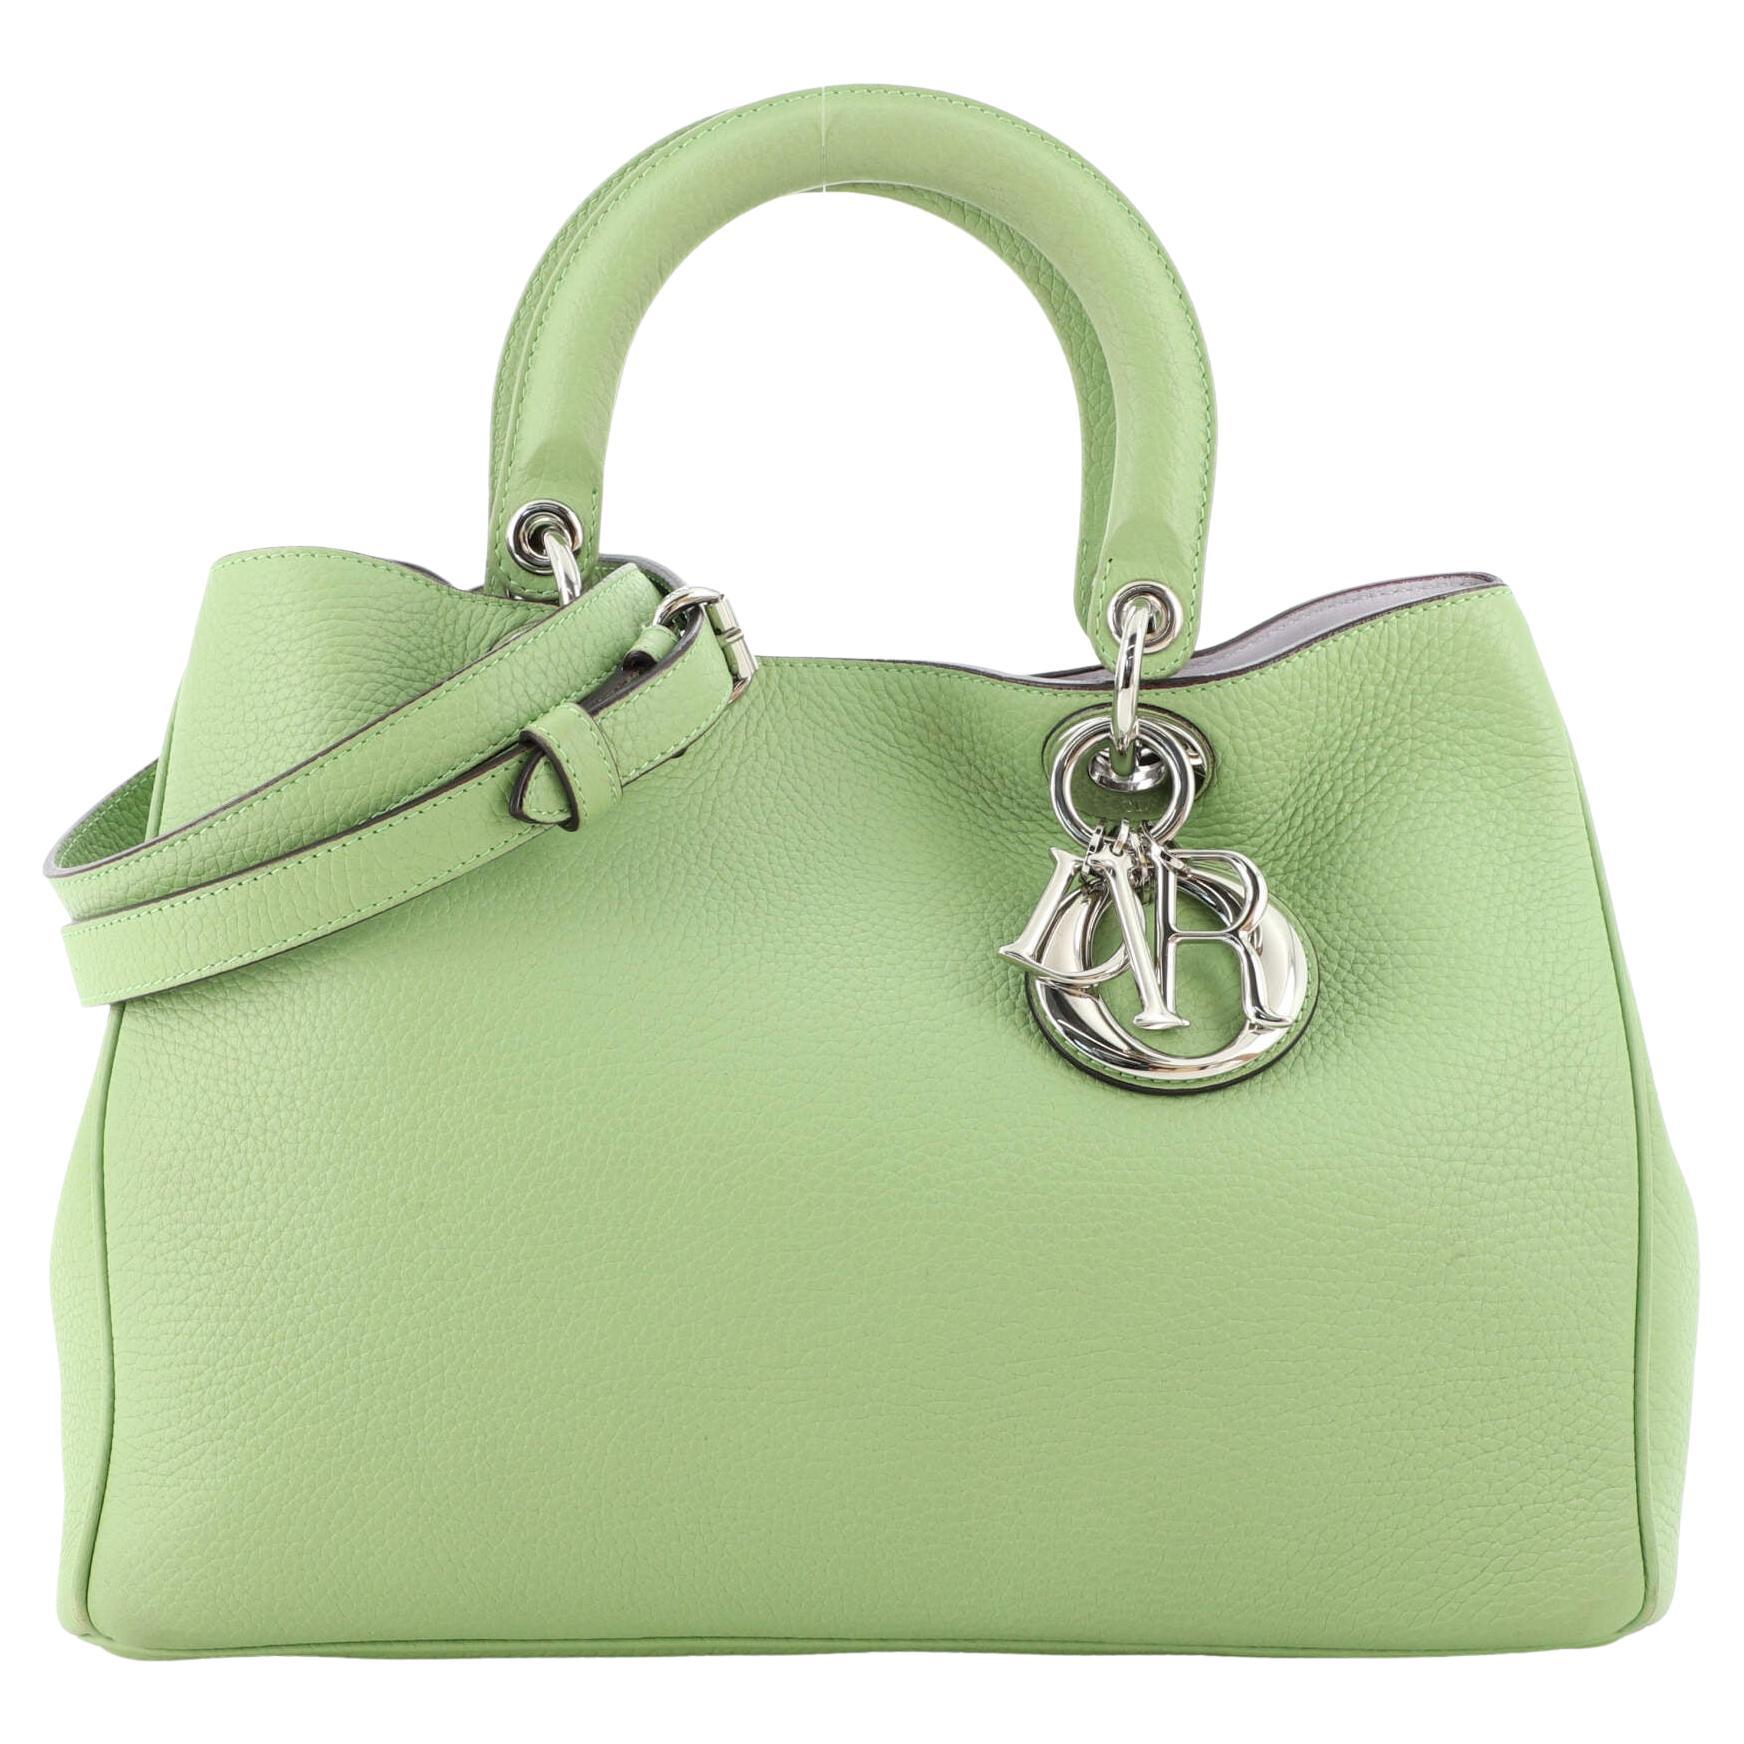 Dior Green Leather Medium Diorever Bag At 1stdibs Dior Green Handbag Dior Green Bag